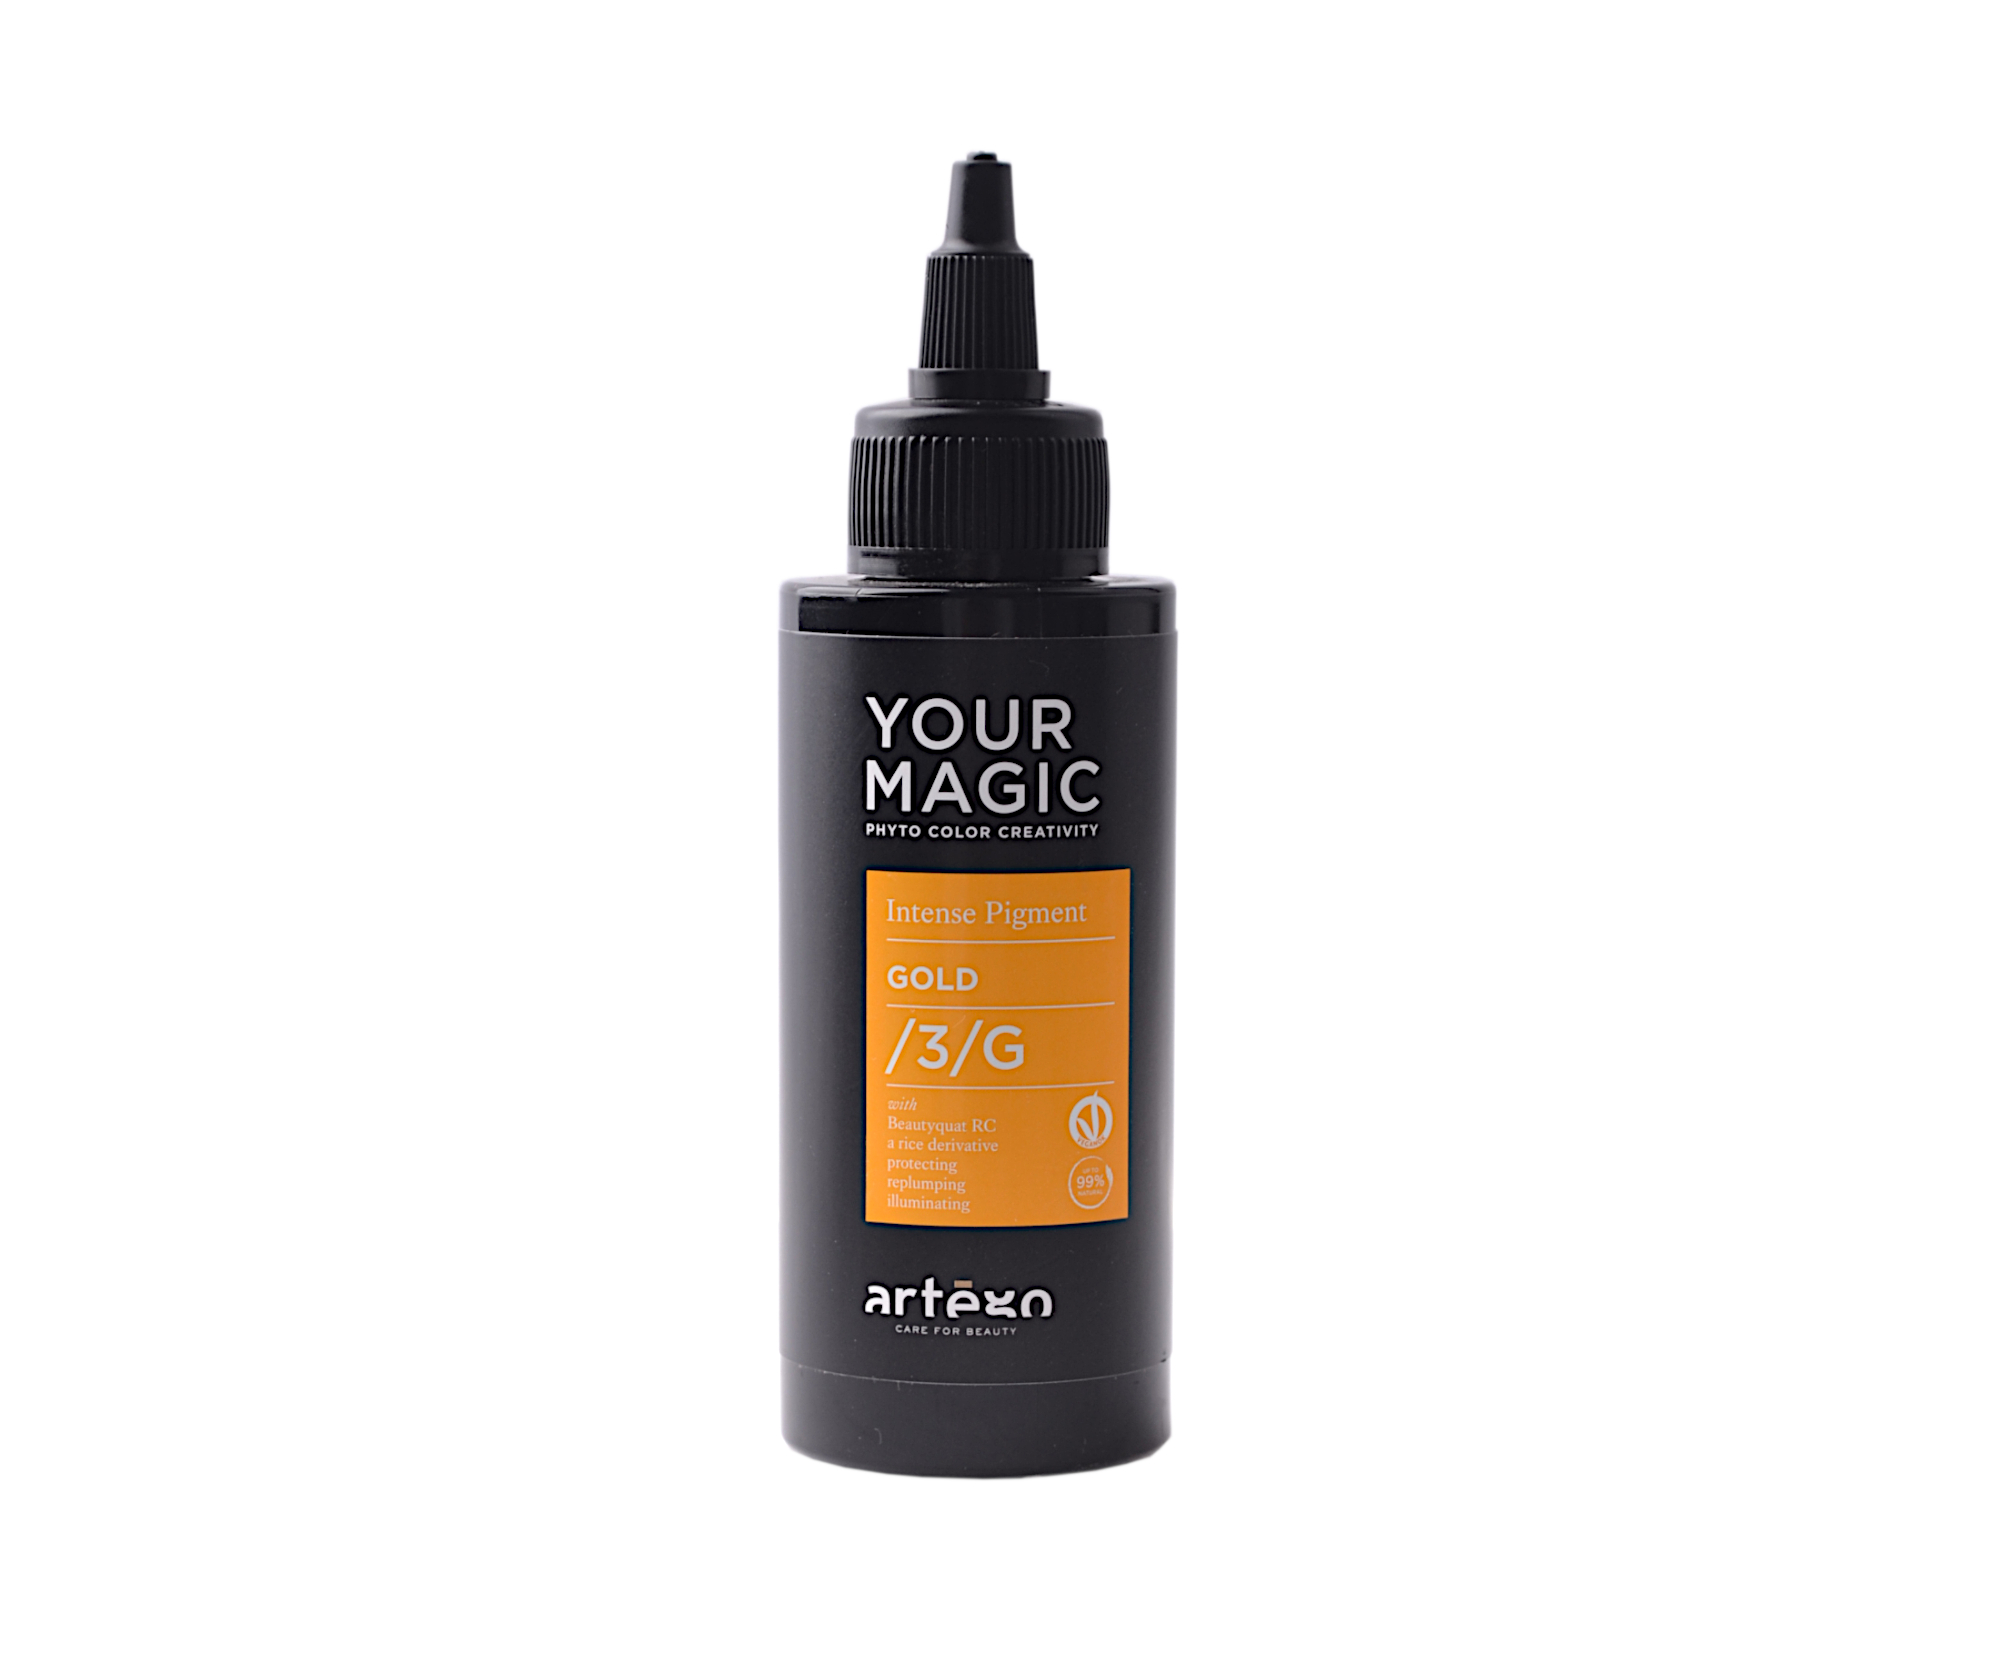 Přímé barevné pigmenty na vlasy Artégo Your Magic /3/ G Gold - 100 ml, zlatá (0165266) + DÁREK ZDARMA